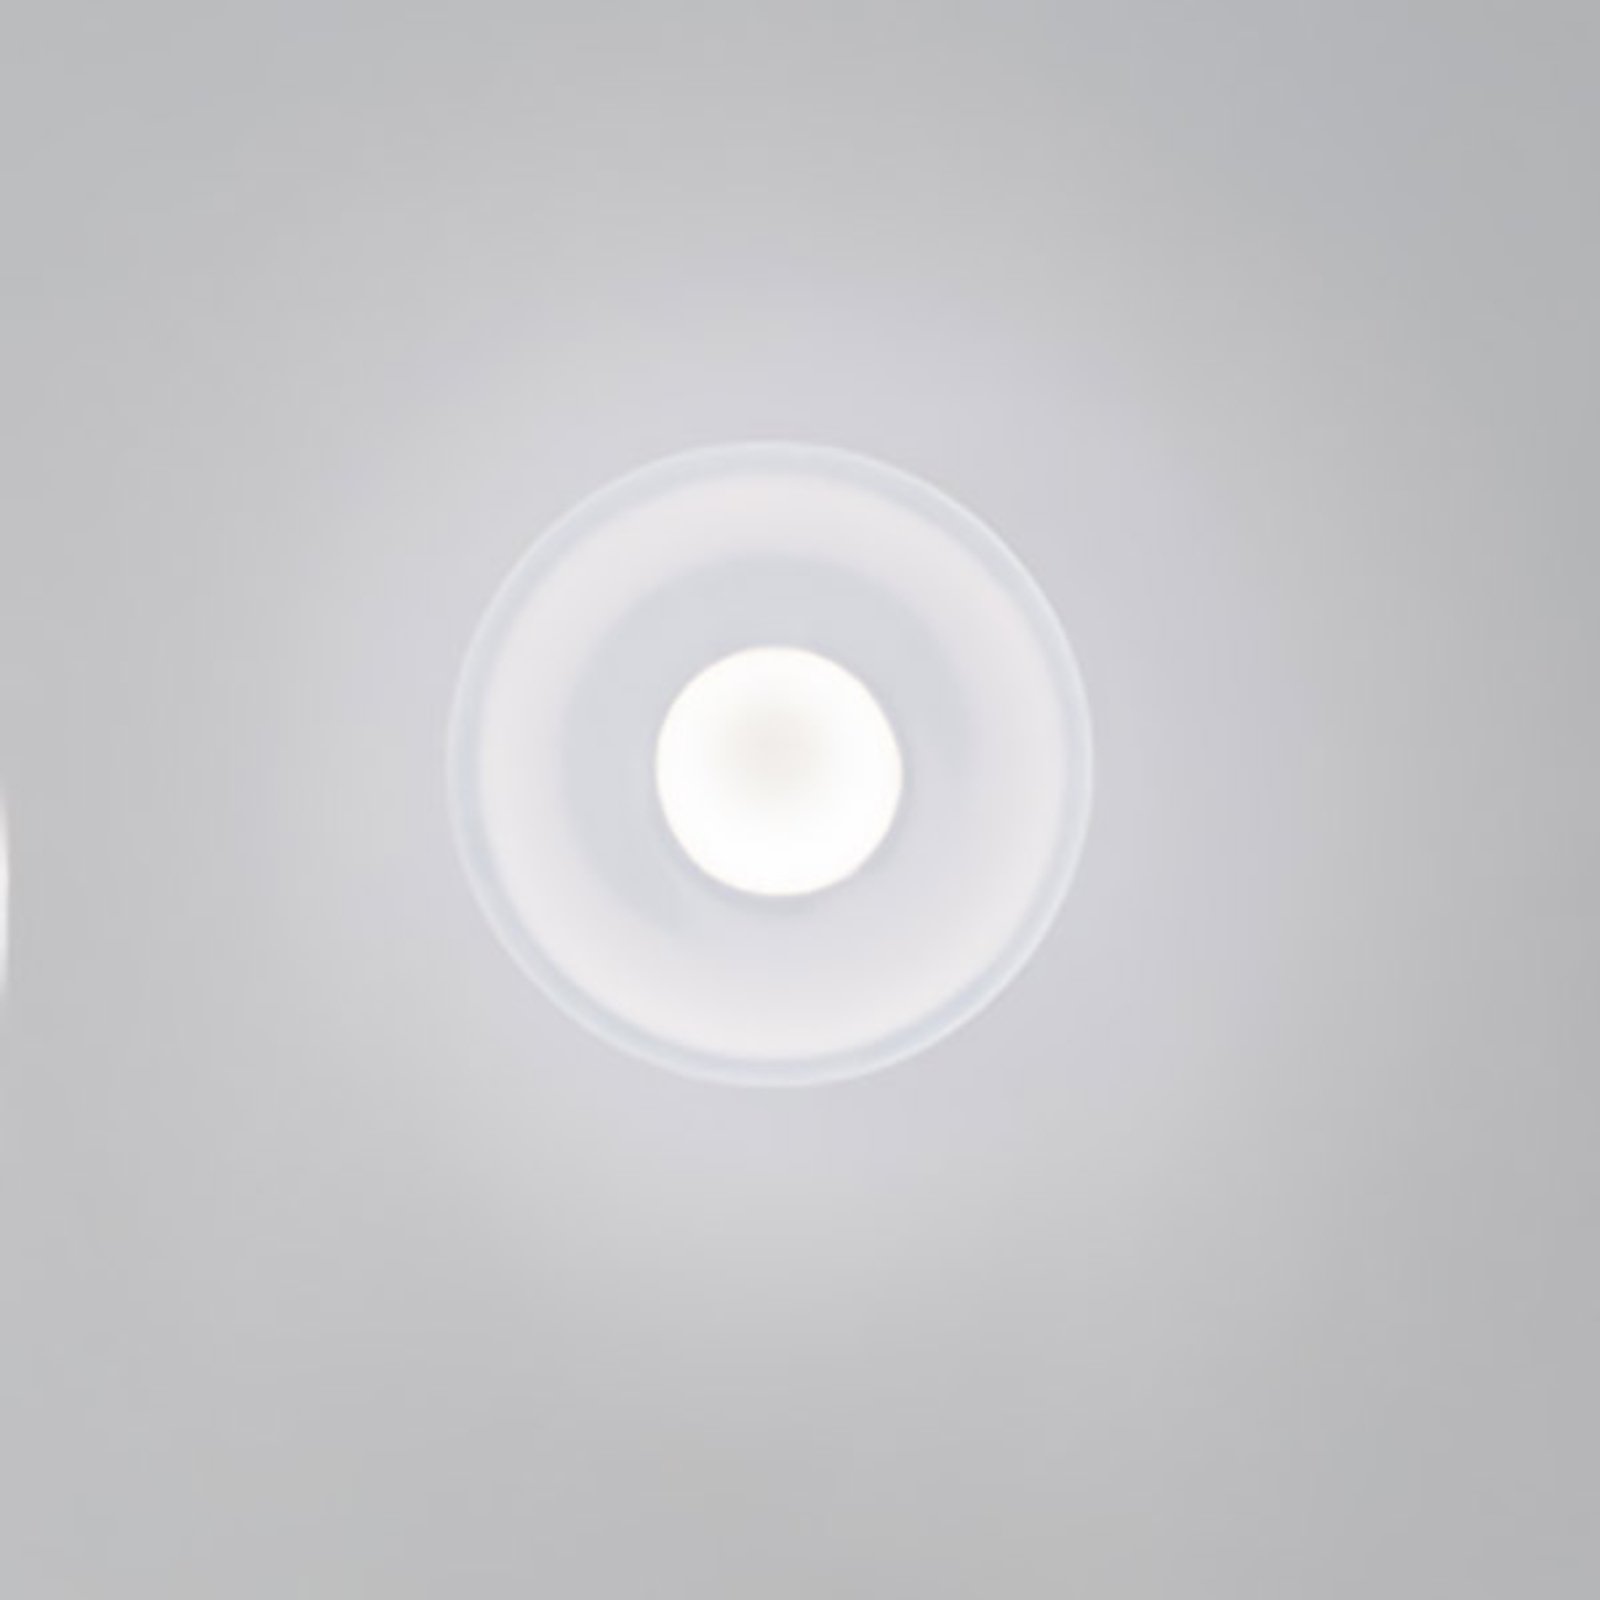 Tom Dixon Opal Surface kinkiet LED, Ø 25 cm